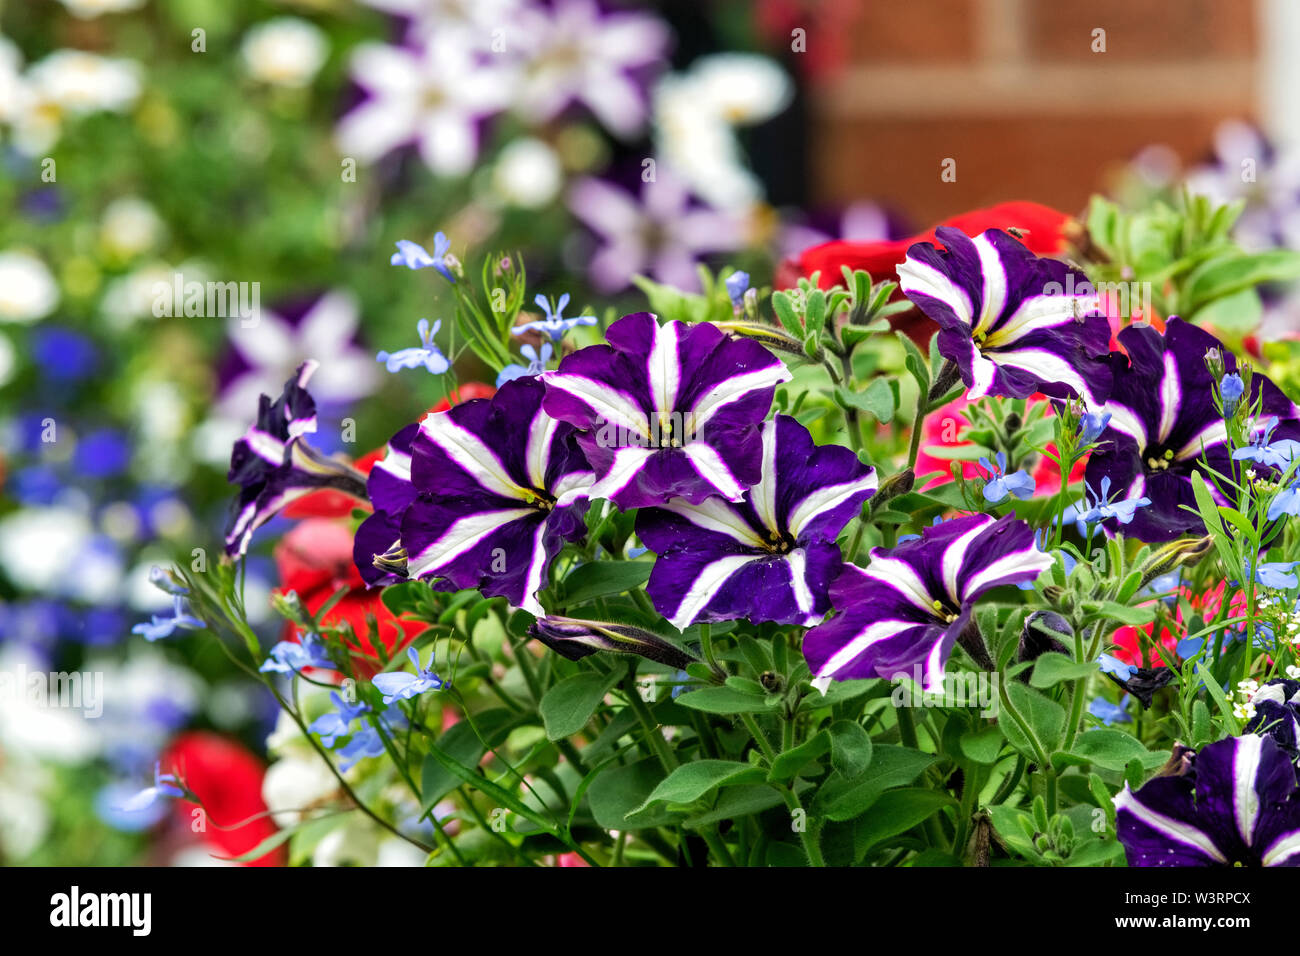 Beautiful bedding plants including Petunias and Lobelia, growing in an urban garden Stock Photo